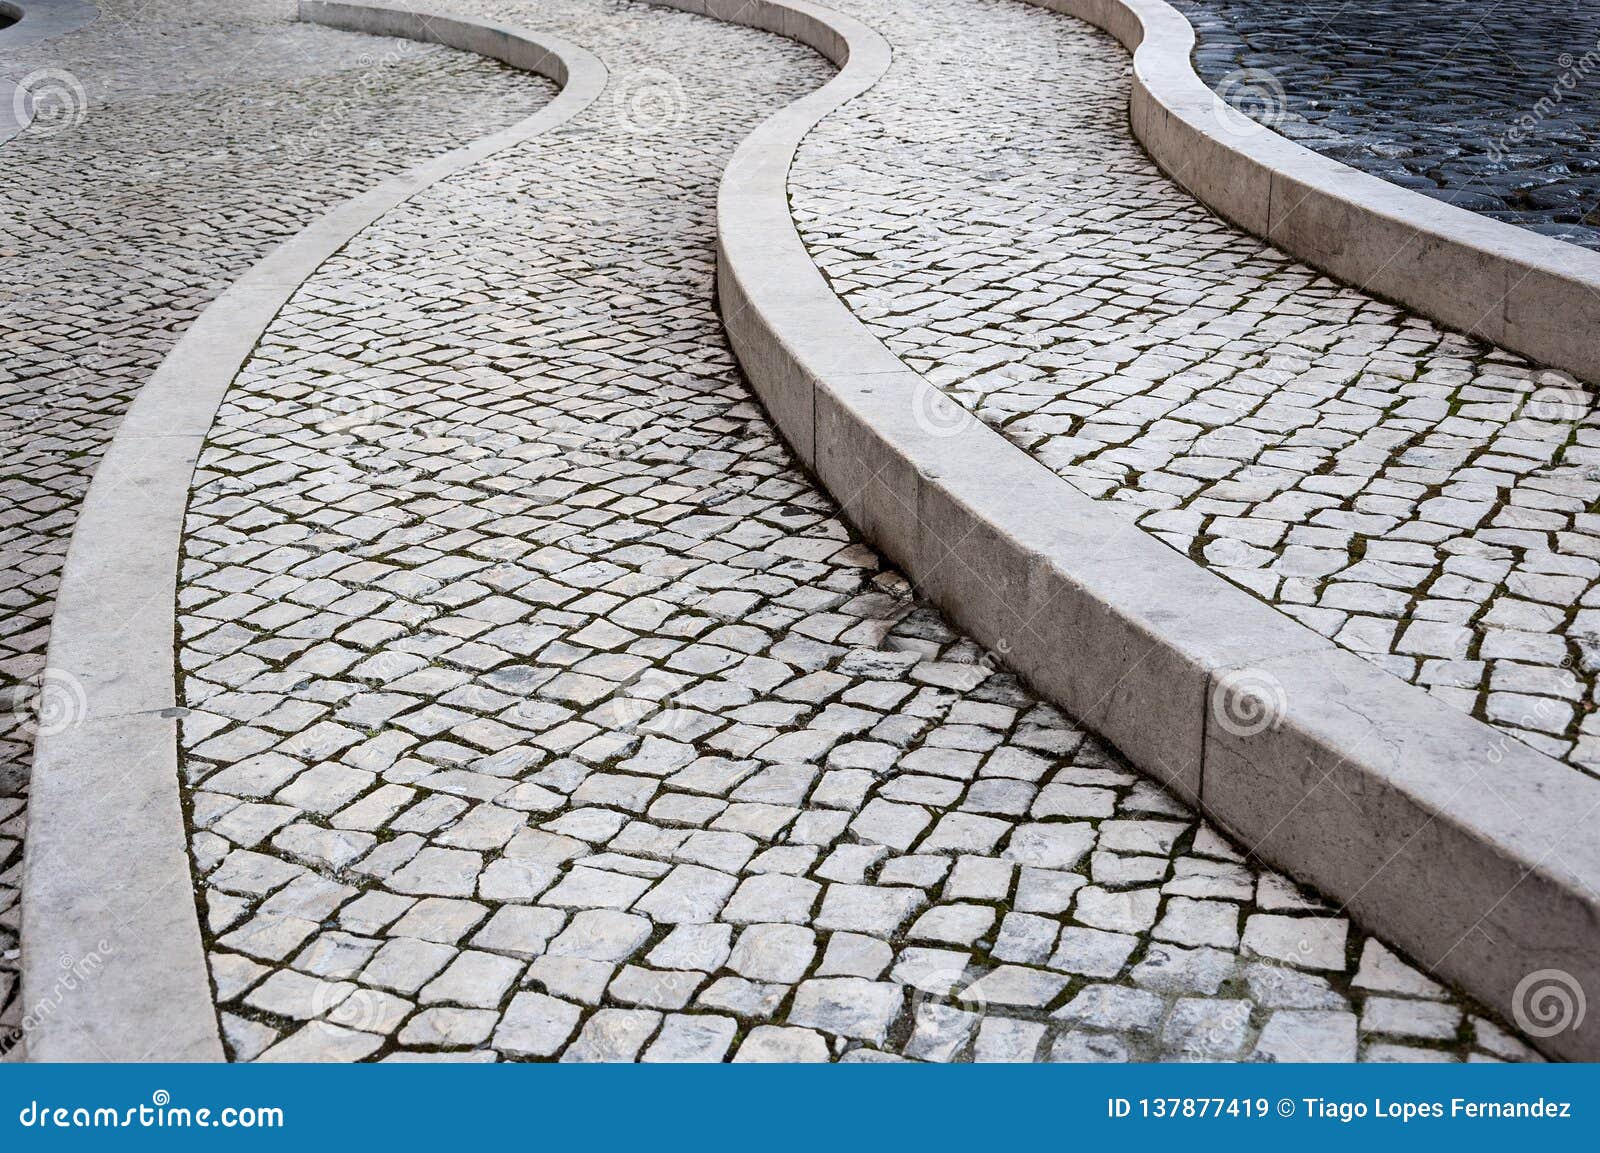 detail of the beautiful portuguese pavement calÃÂ§ada portuguesa in the city of lisbon